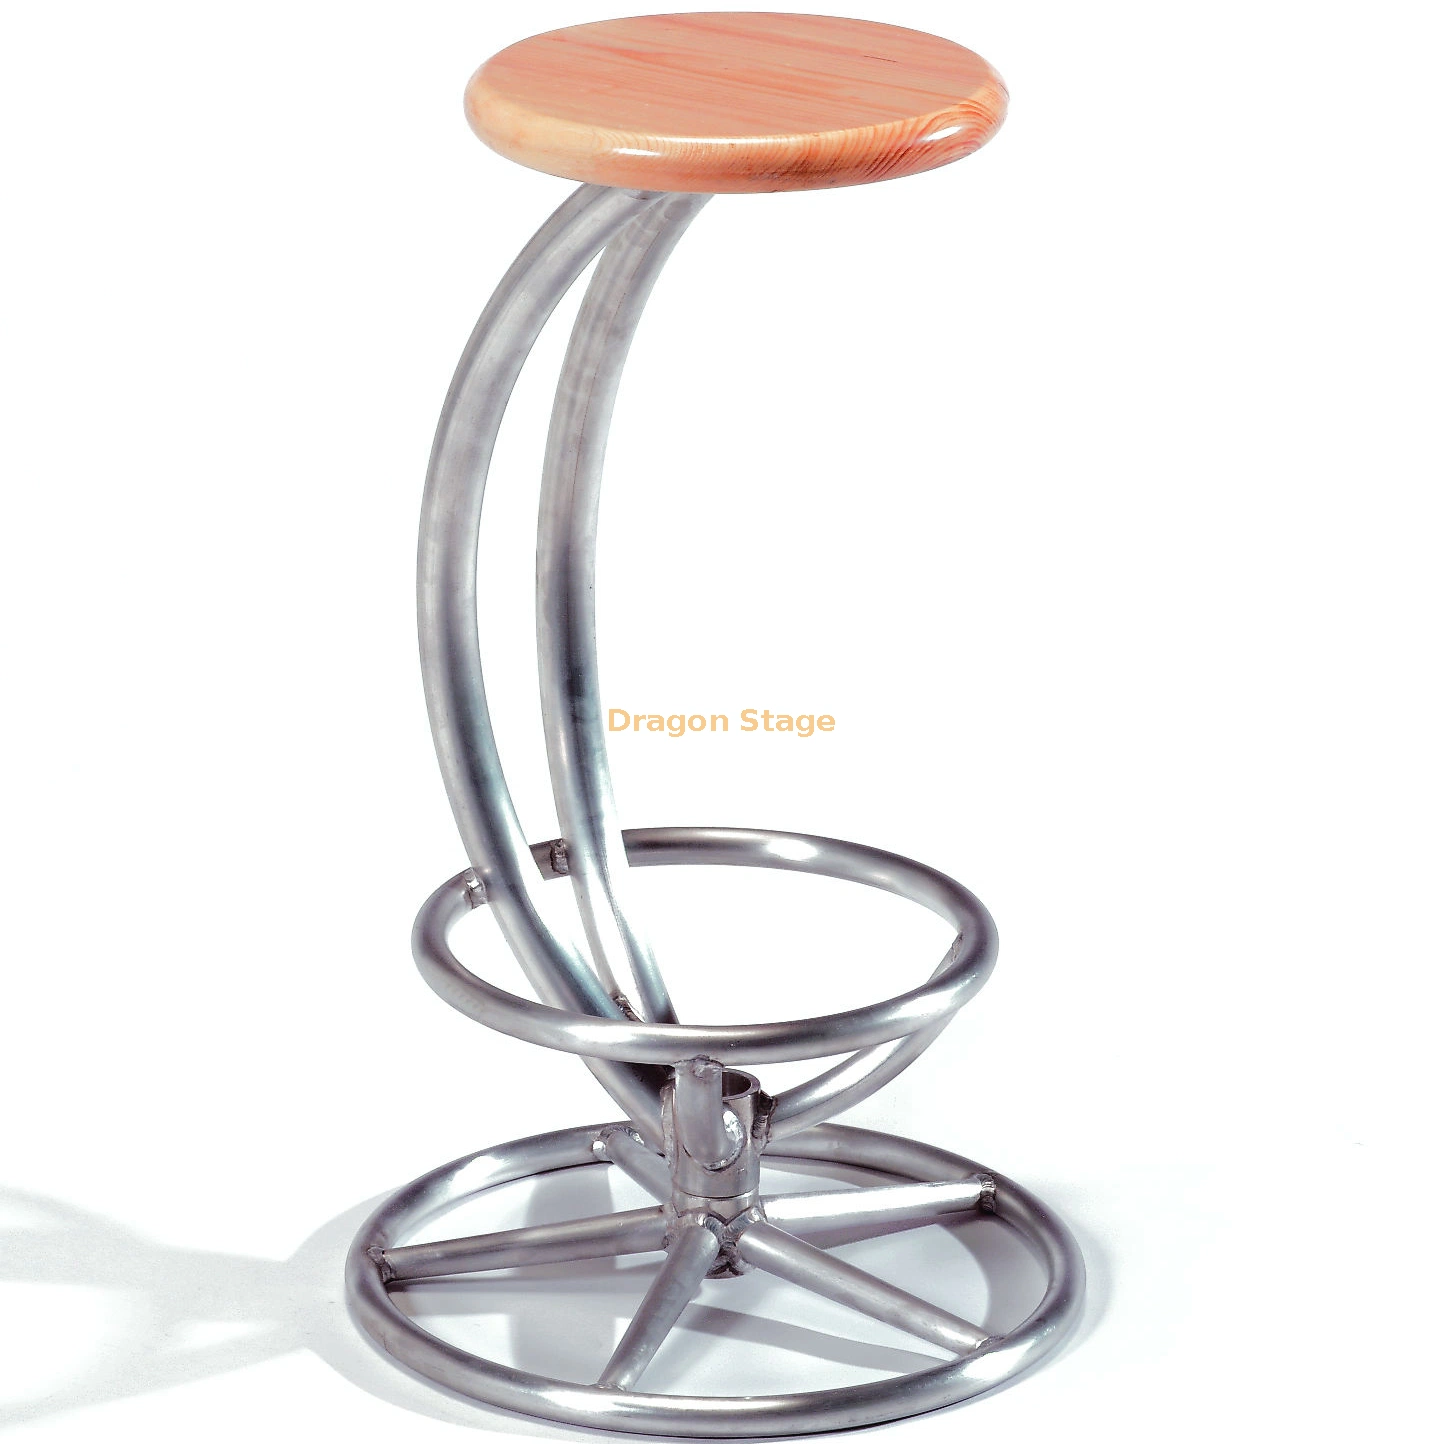 Dragonstage Aluminium Truss Stuhl Tisch Holzdeck Portable Bar Möbel Barstuhl